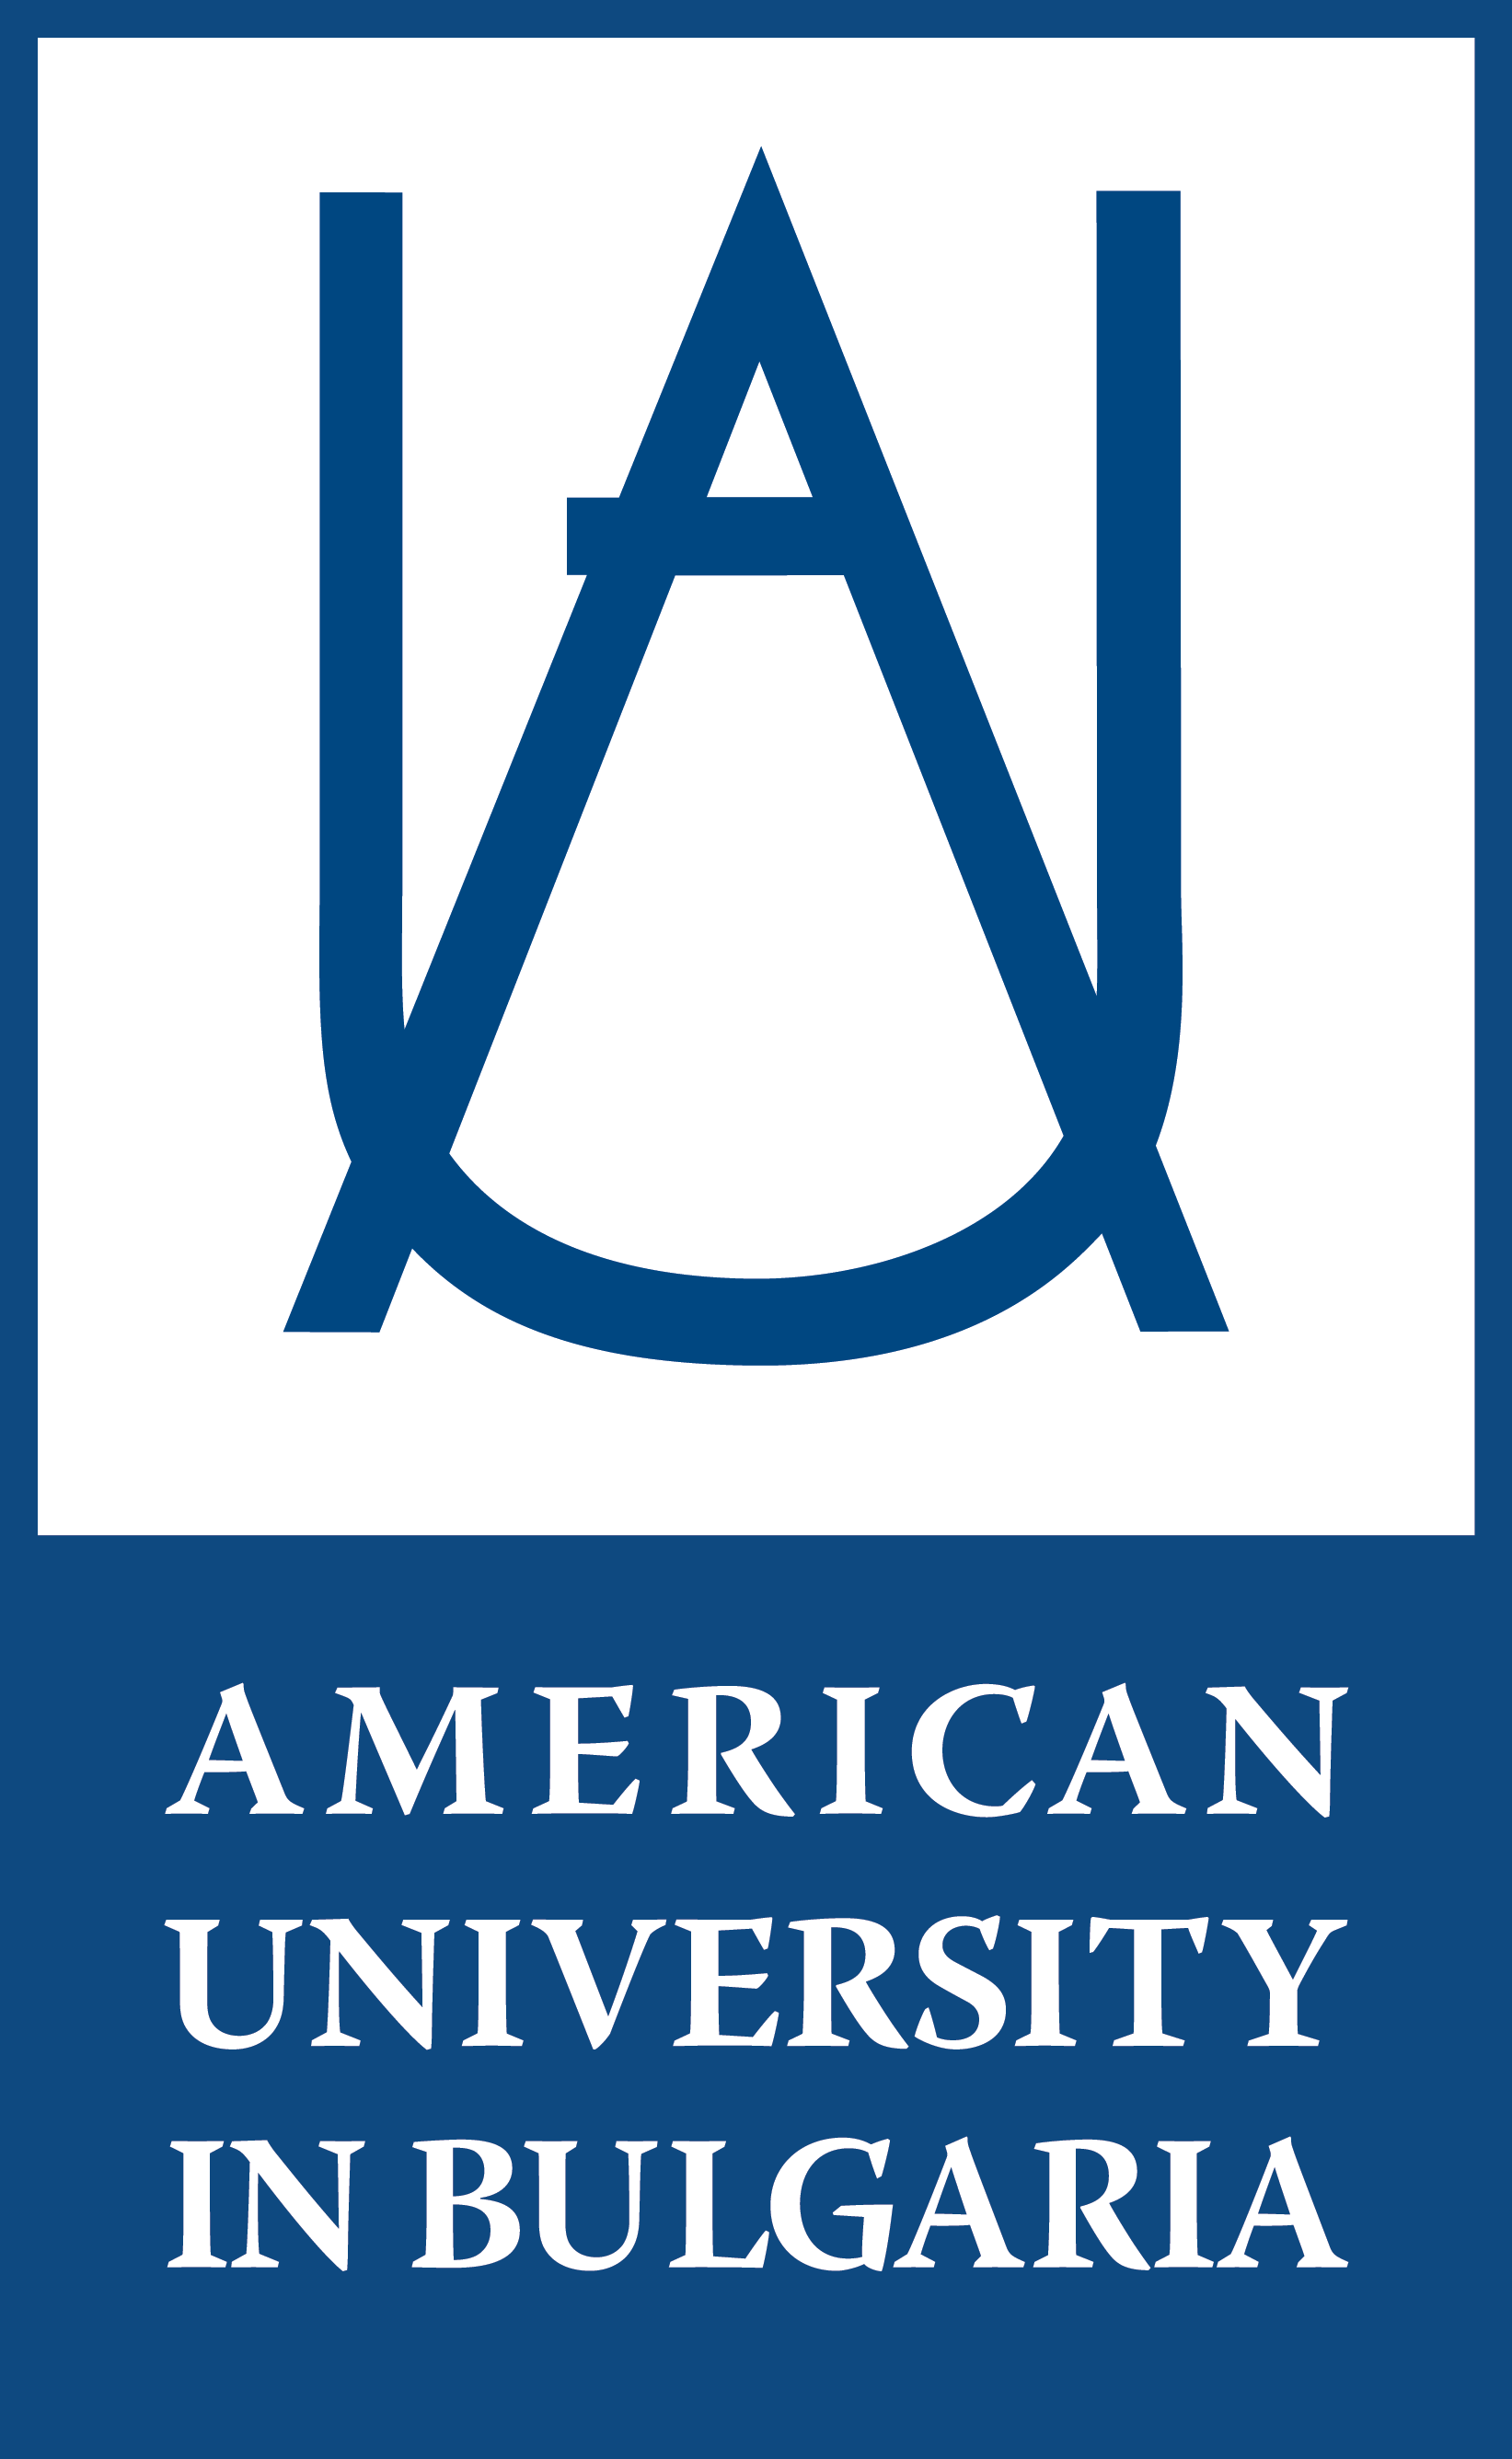 American University in Bulgaroa